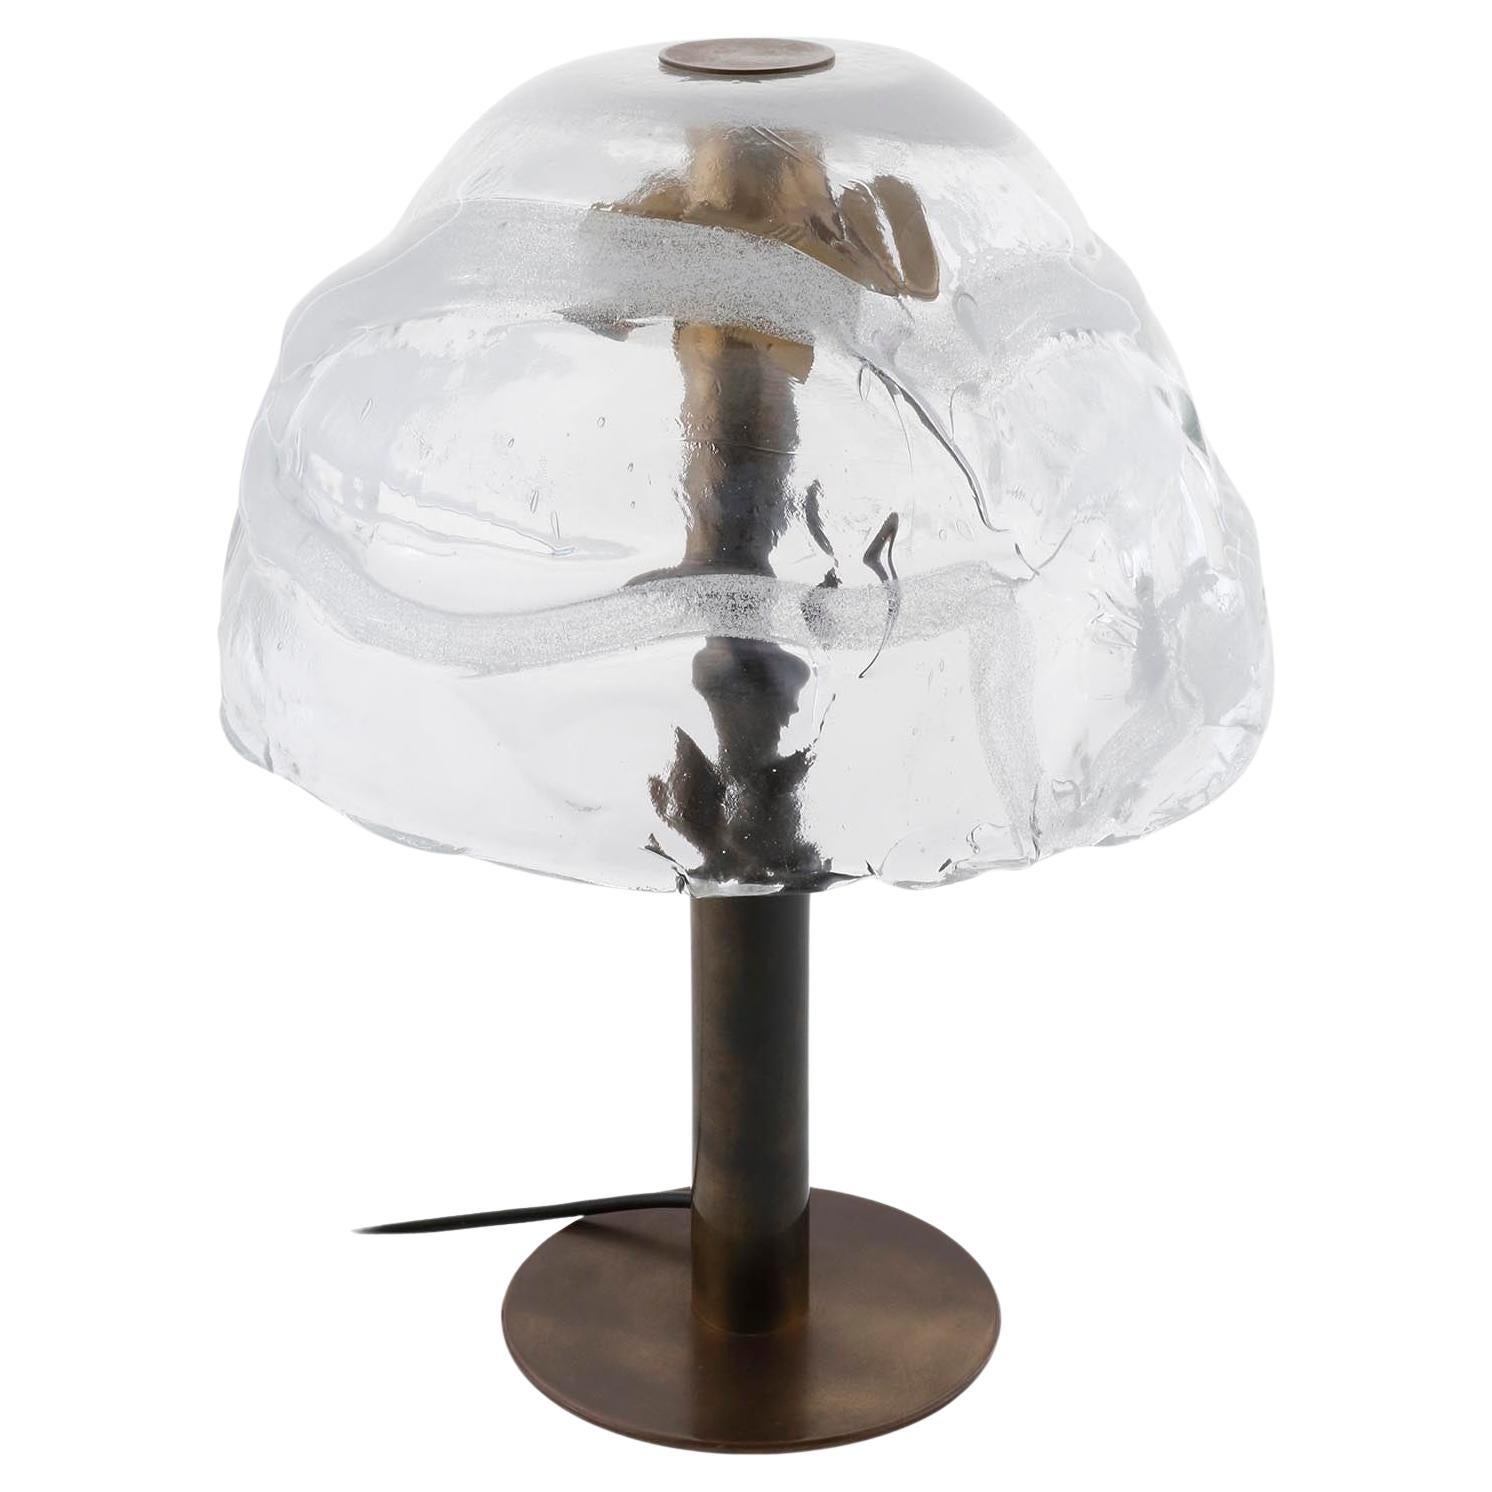 Kalmar Table Lamp Model 'Dom', Murano Glass Shade Patinated Brass, 1970s